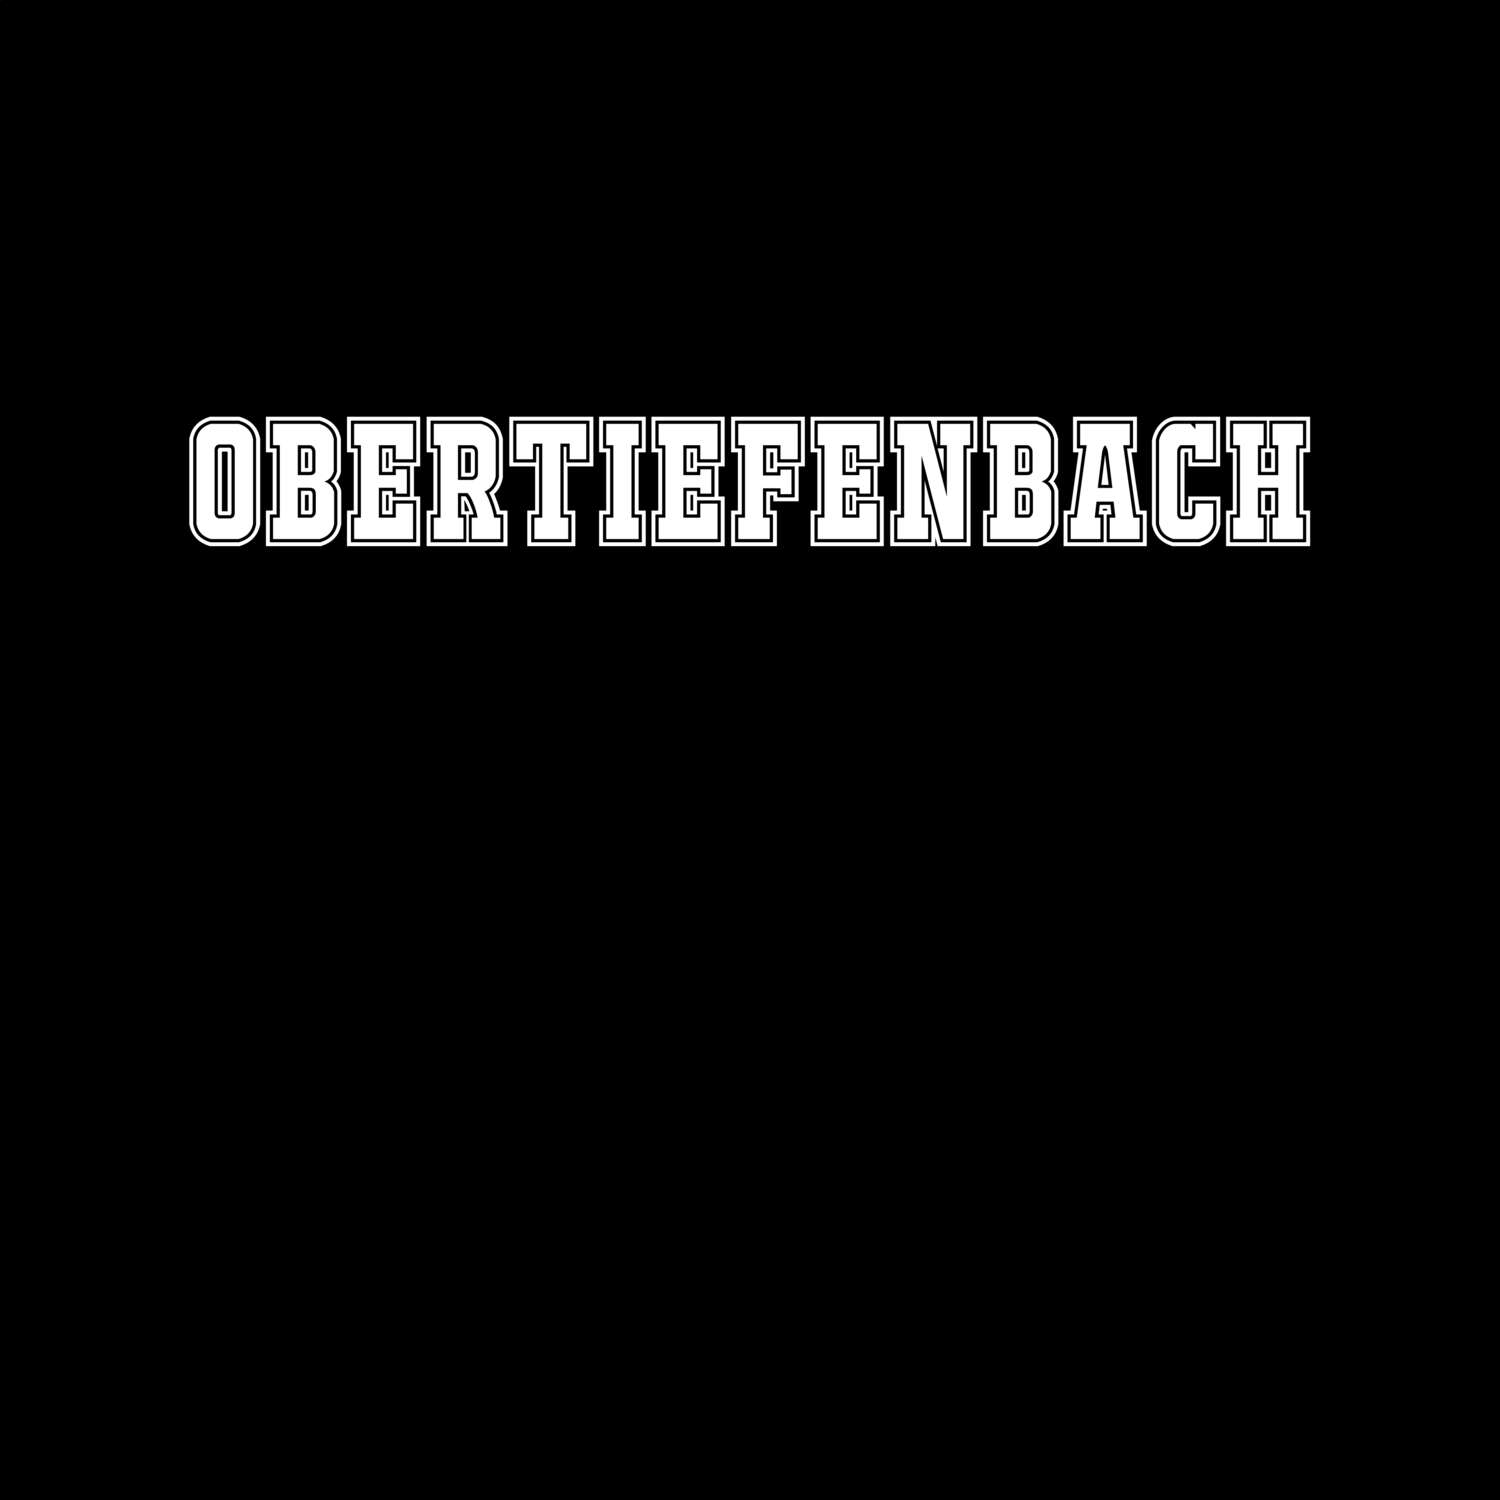 Obertiefenbach T-Shirt »Classic«